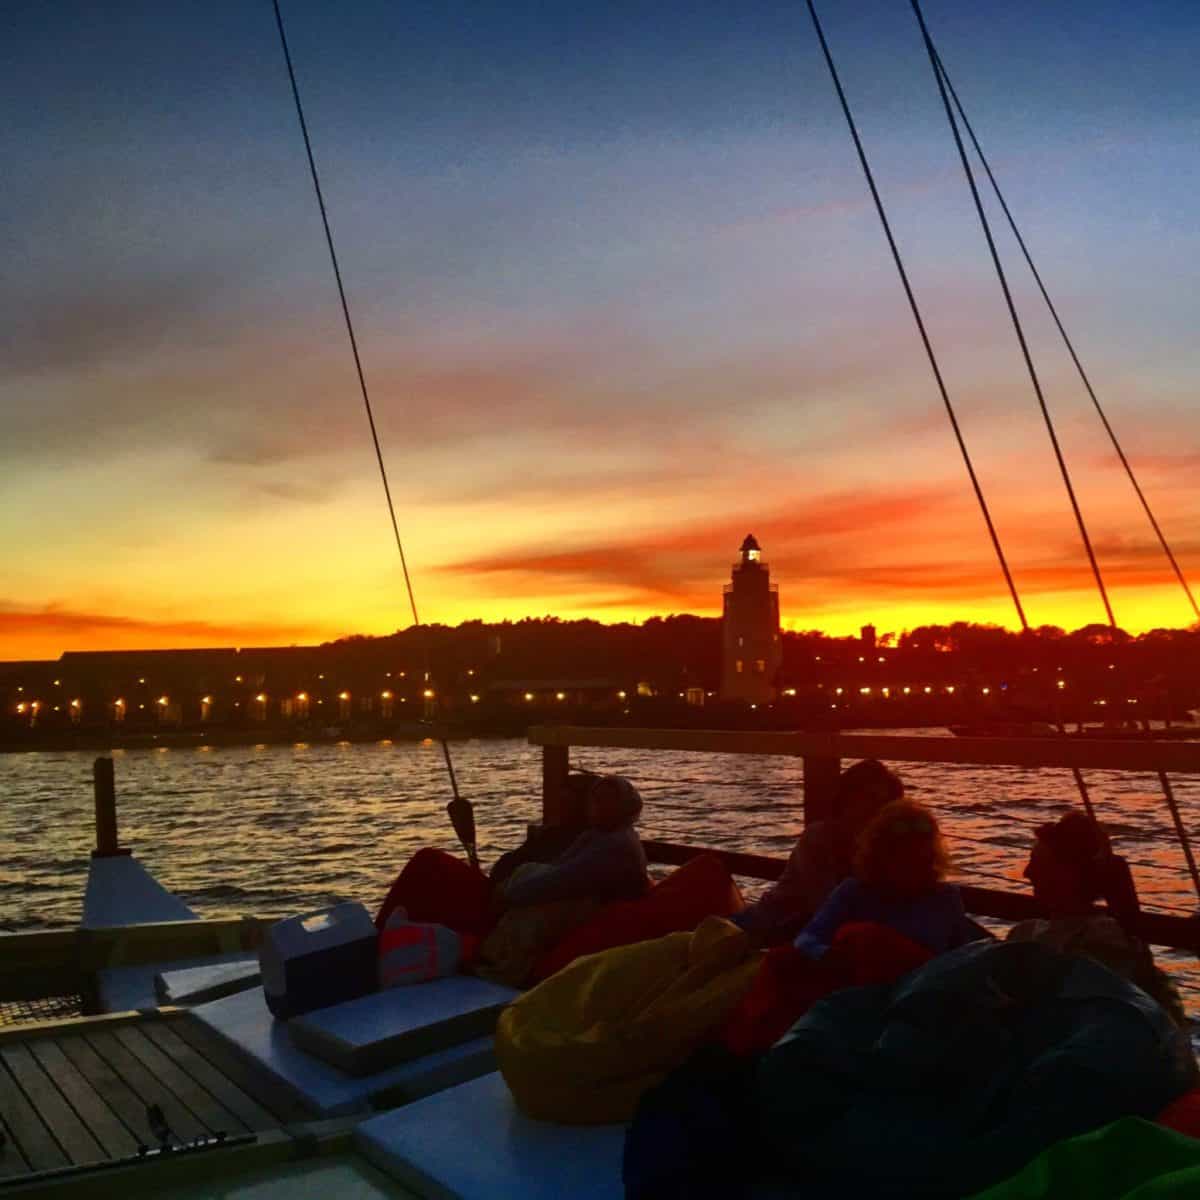 Mon Tiki Largo returns to her dock at Gurney's Star Island Resort after sunset